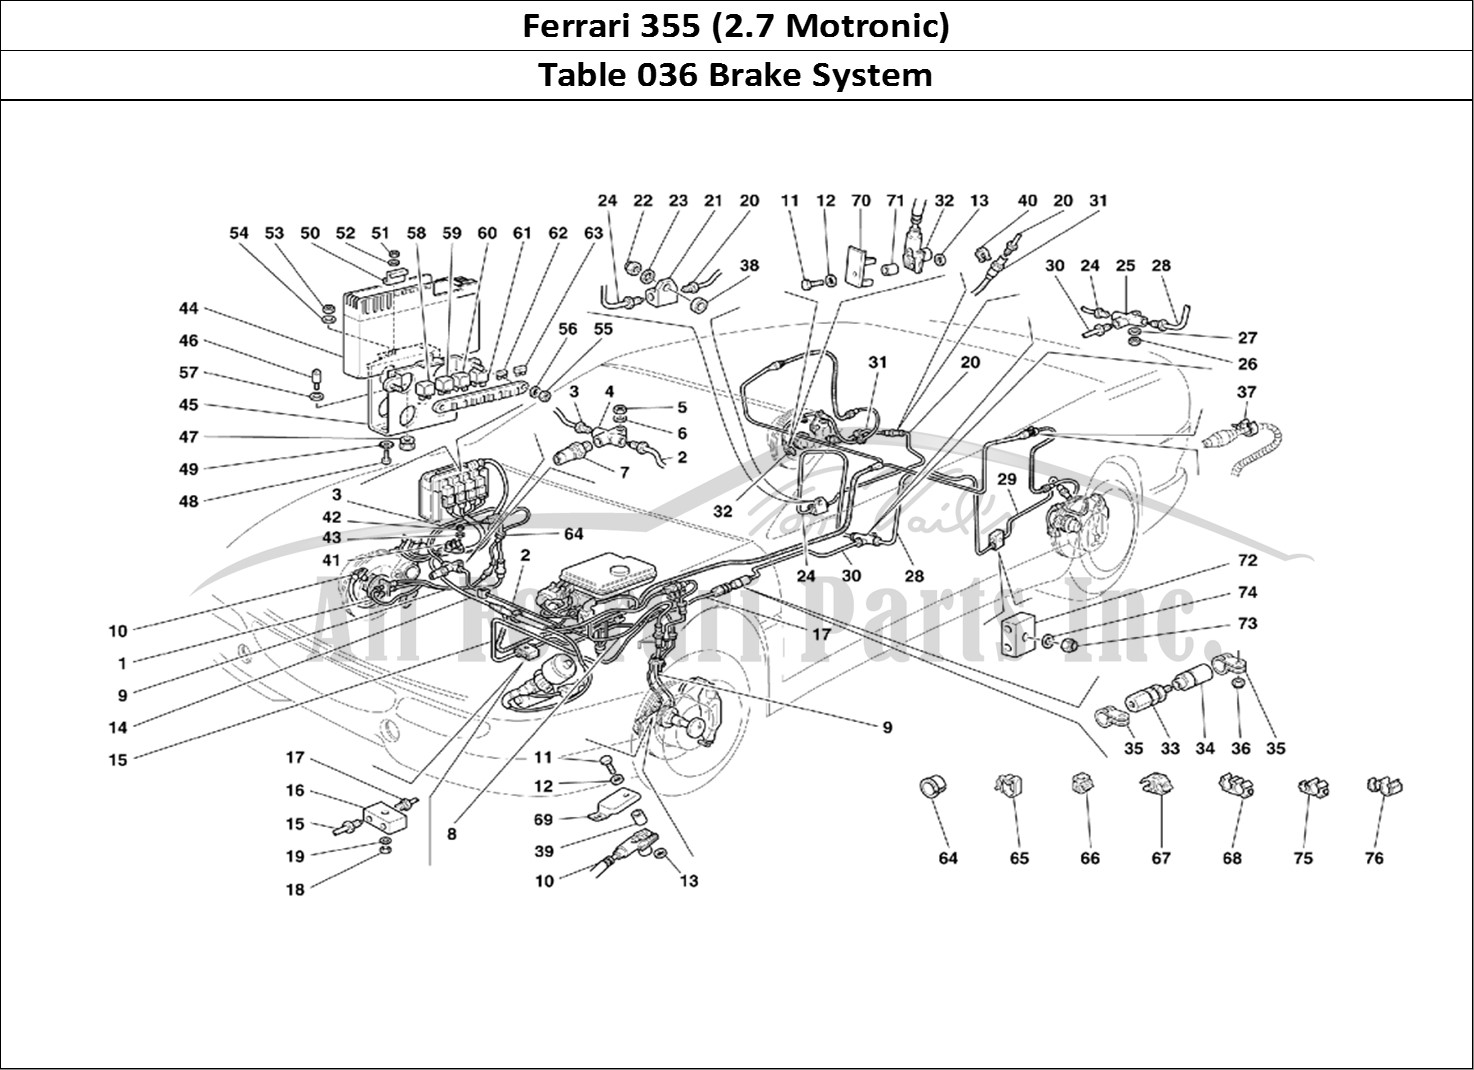 Ferrari Parts Ferrari 355 (2.7 Motronic) Page 036 Brake System